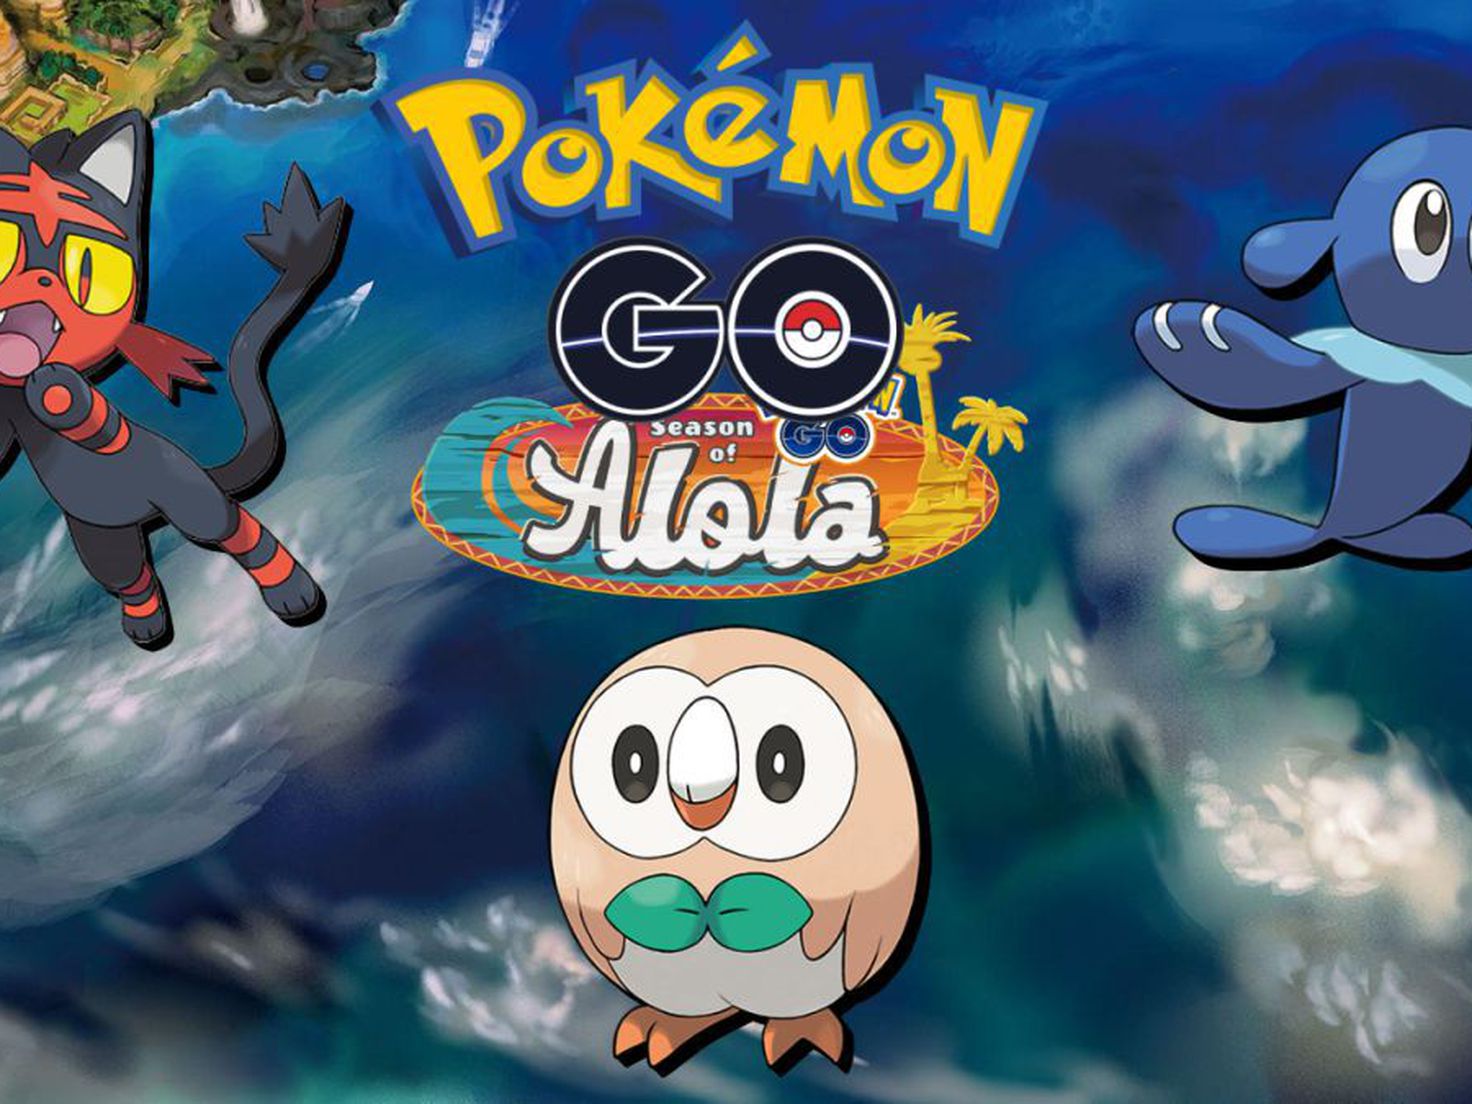 Alola is Coming to Pokemon Go